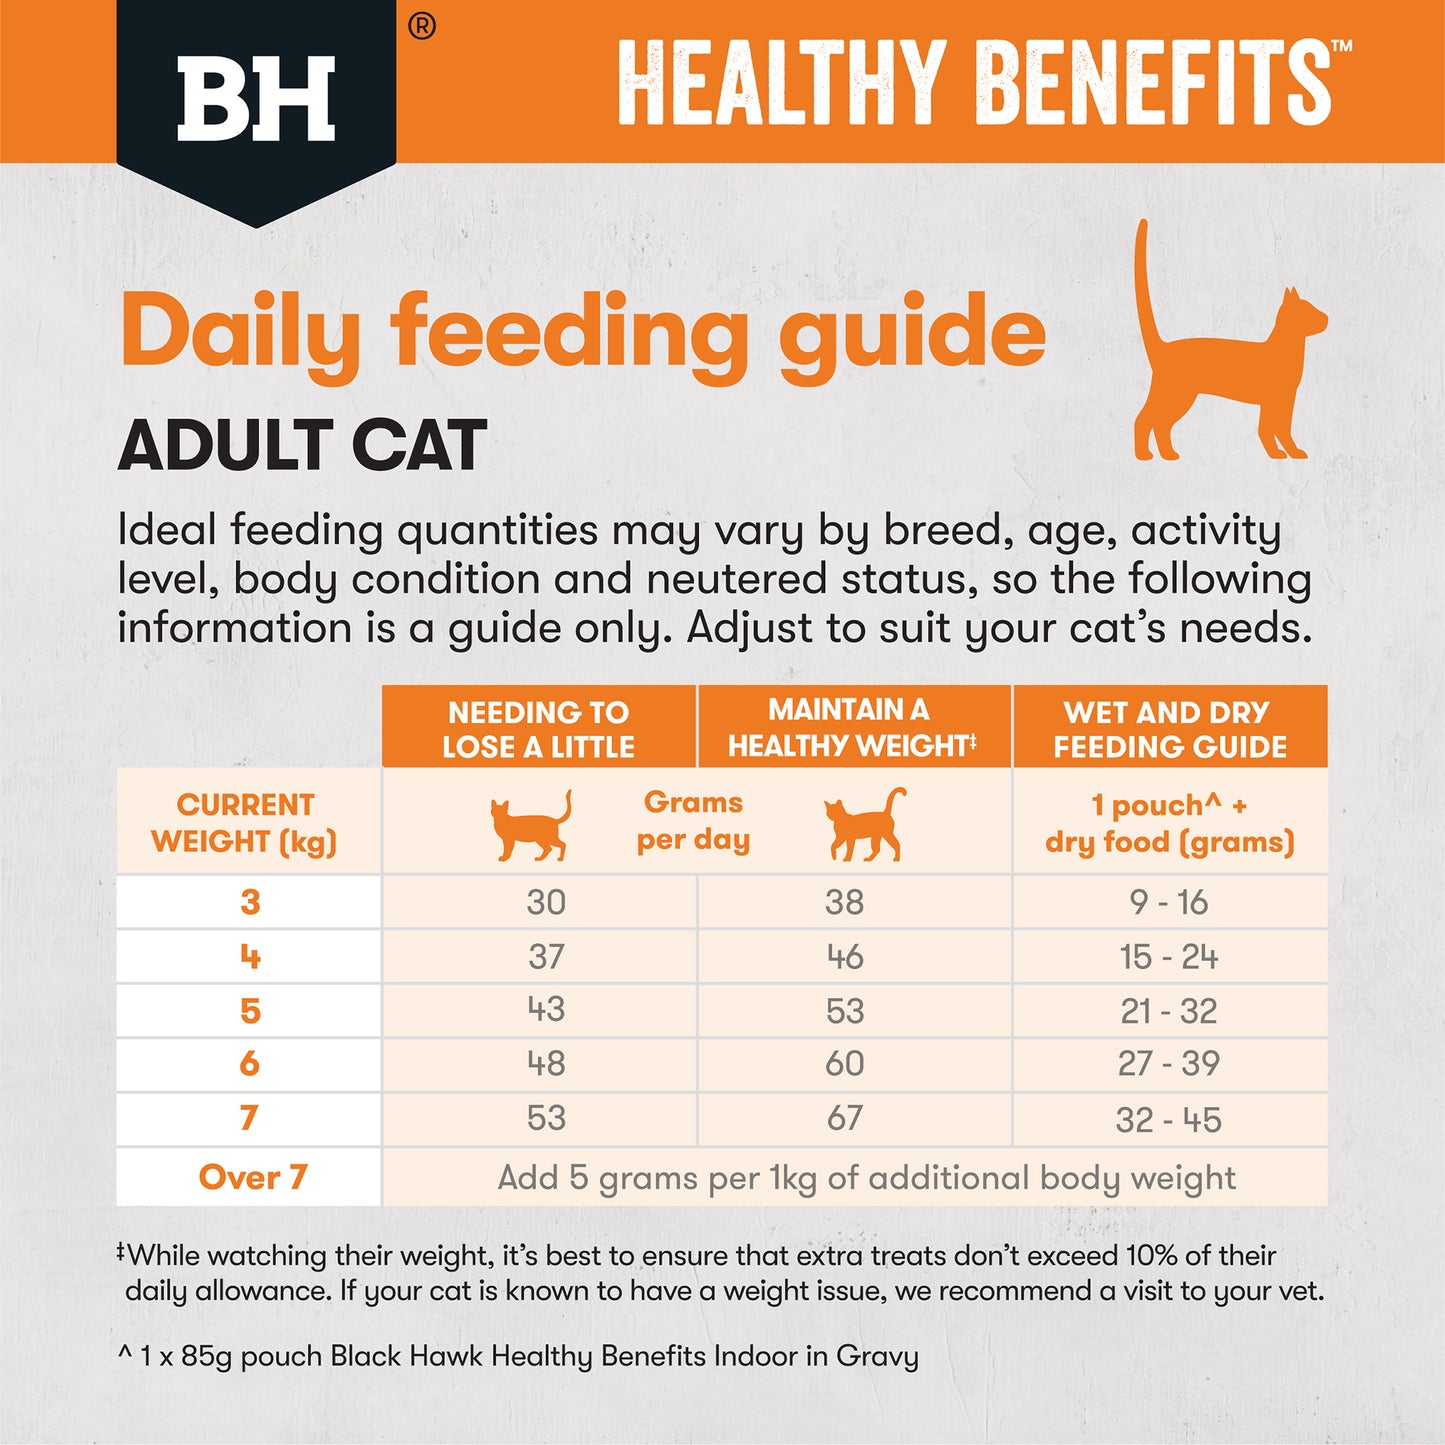 Black Hawk Healthy Benefits Chicken Weight Adult Dry Cat Food 4KG